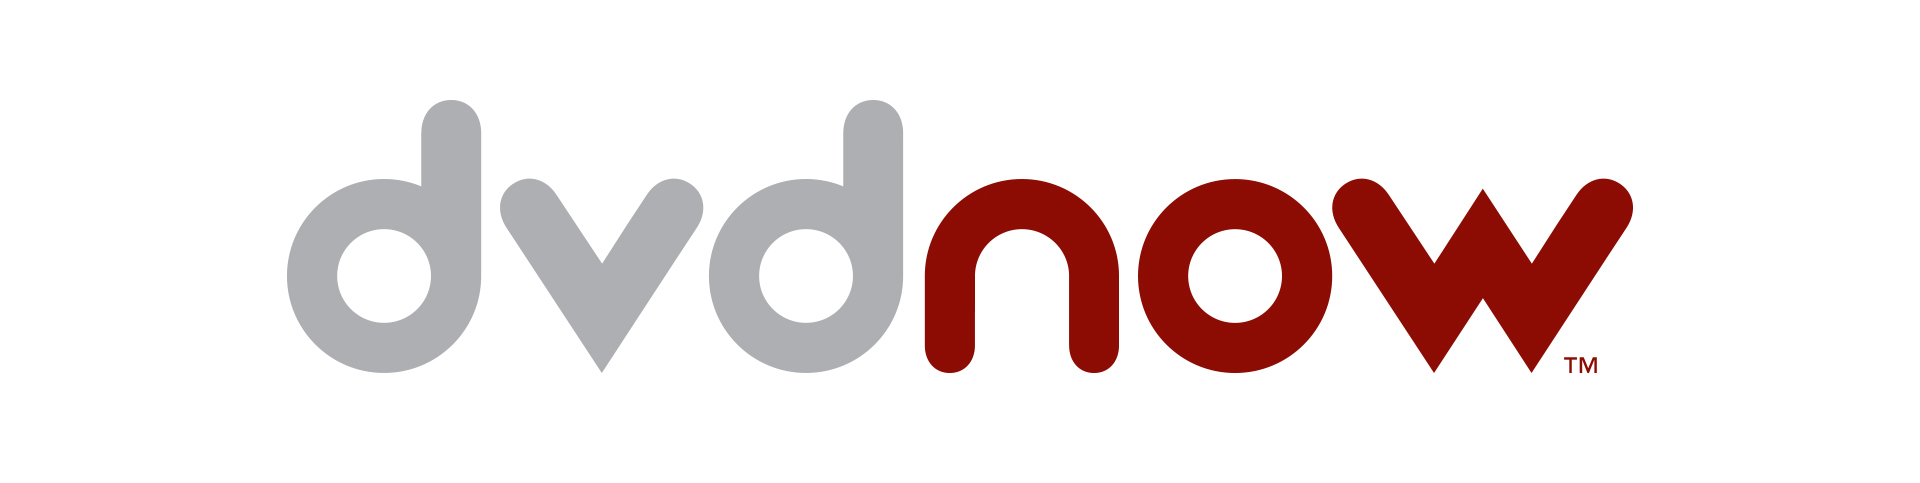 DVD Now Logo & ID - Lighthouse Marketing